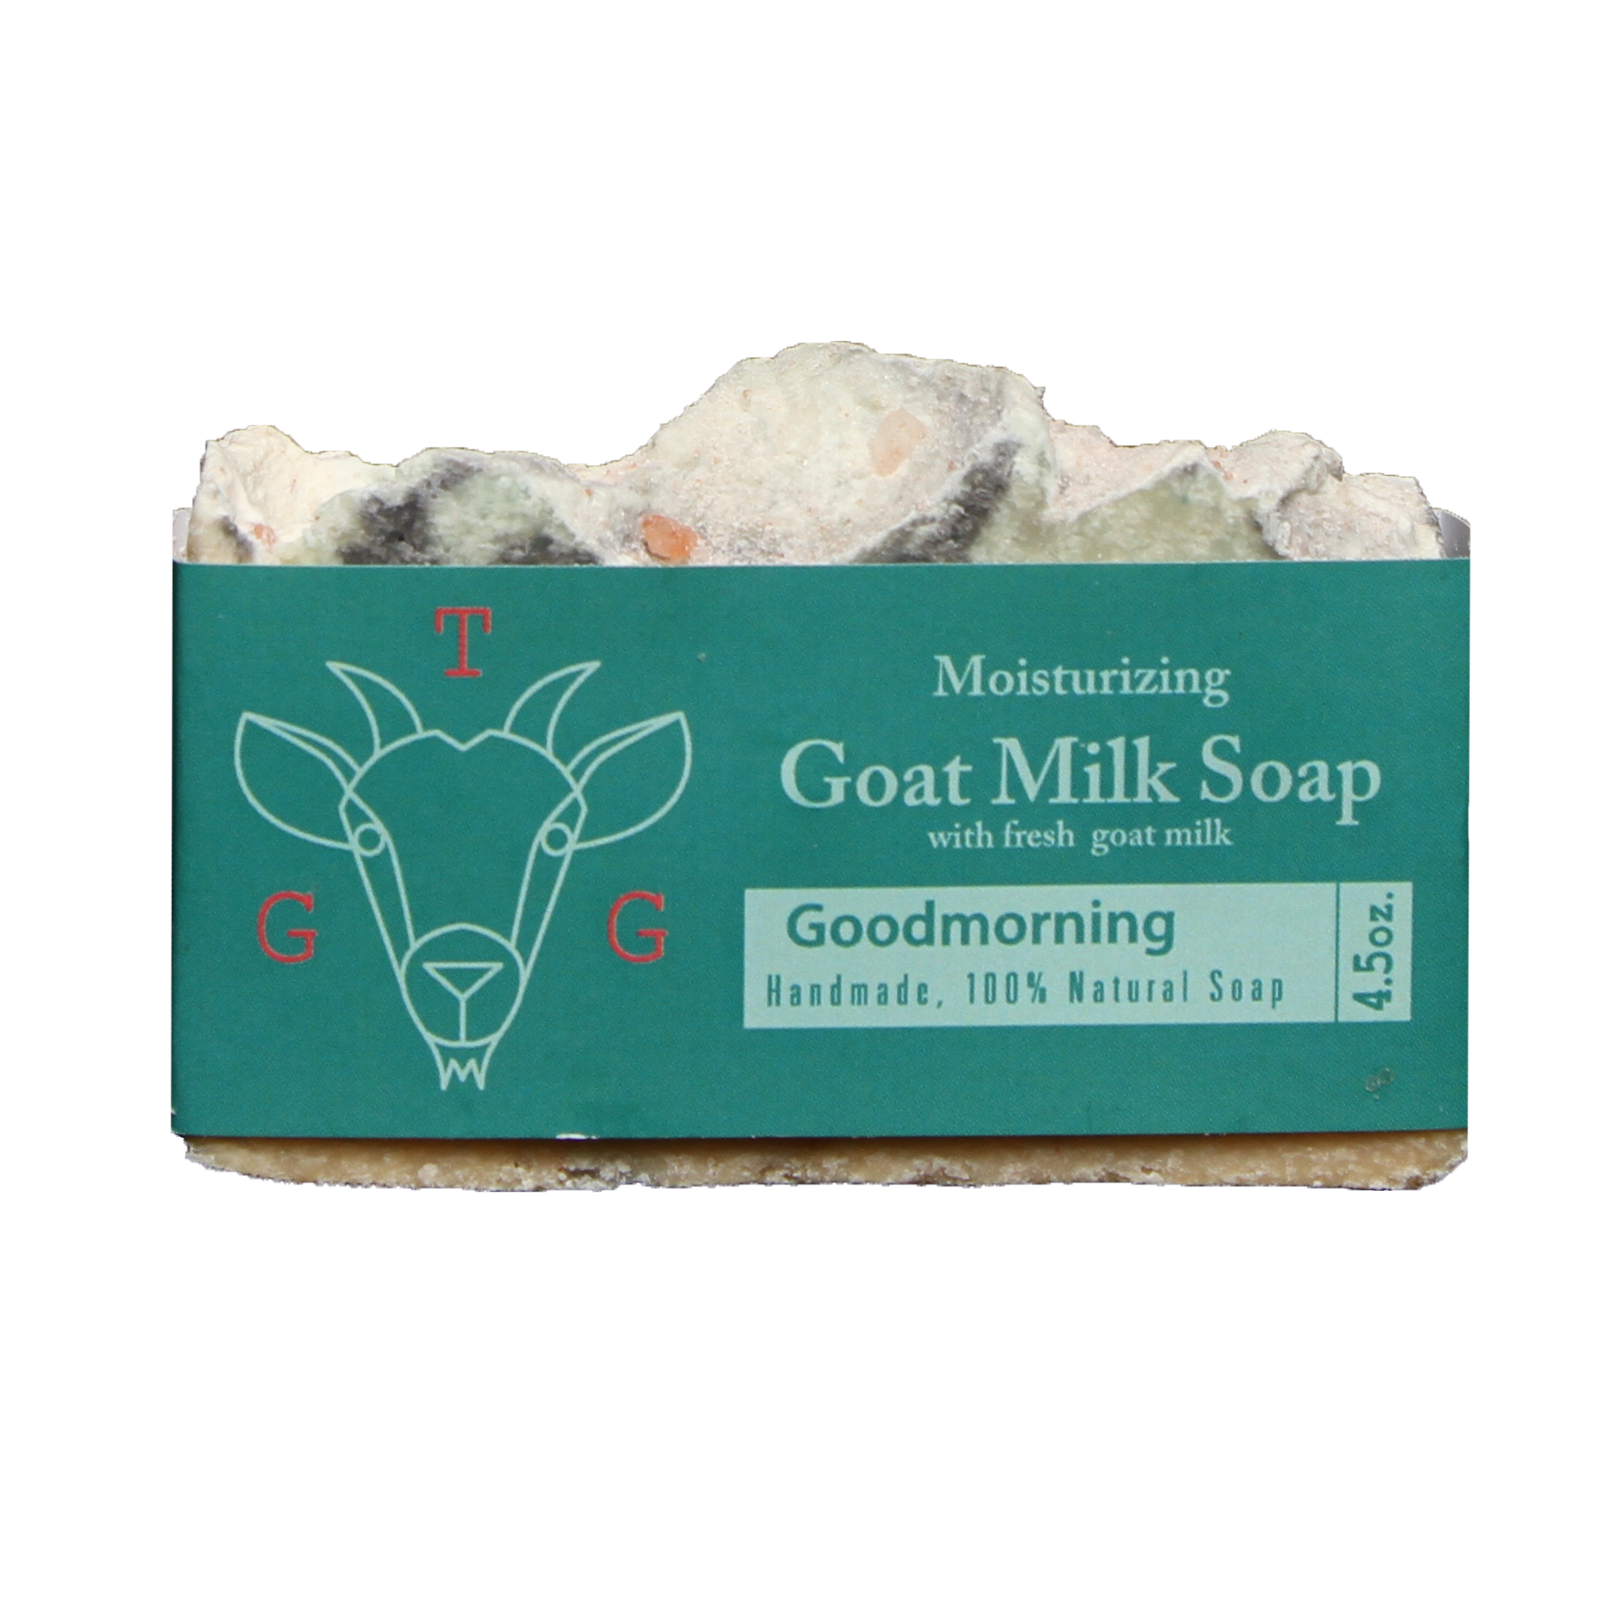 Goodmorning goat milk soap